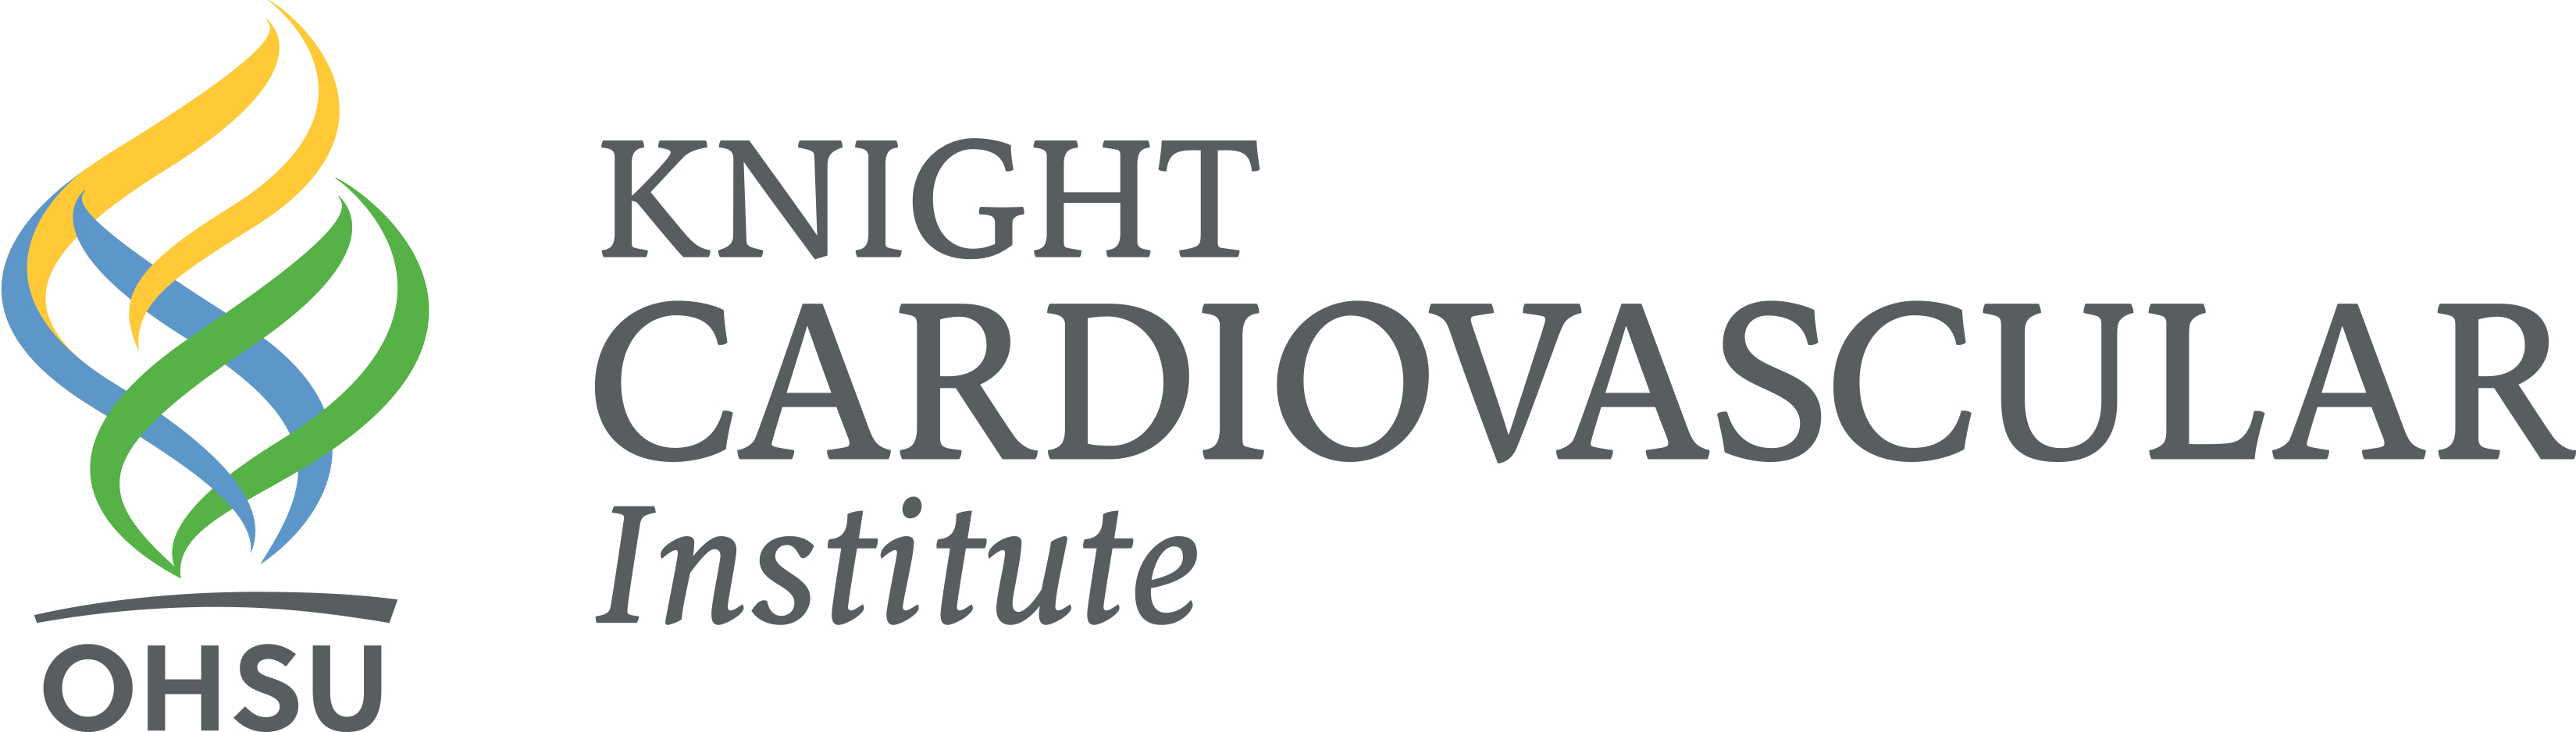 Knight Cardiovascular Institute logo